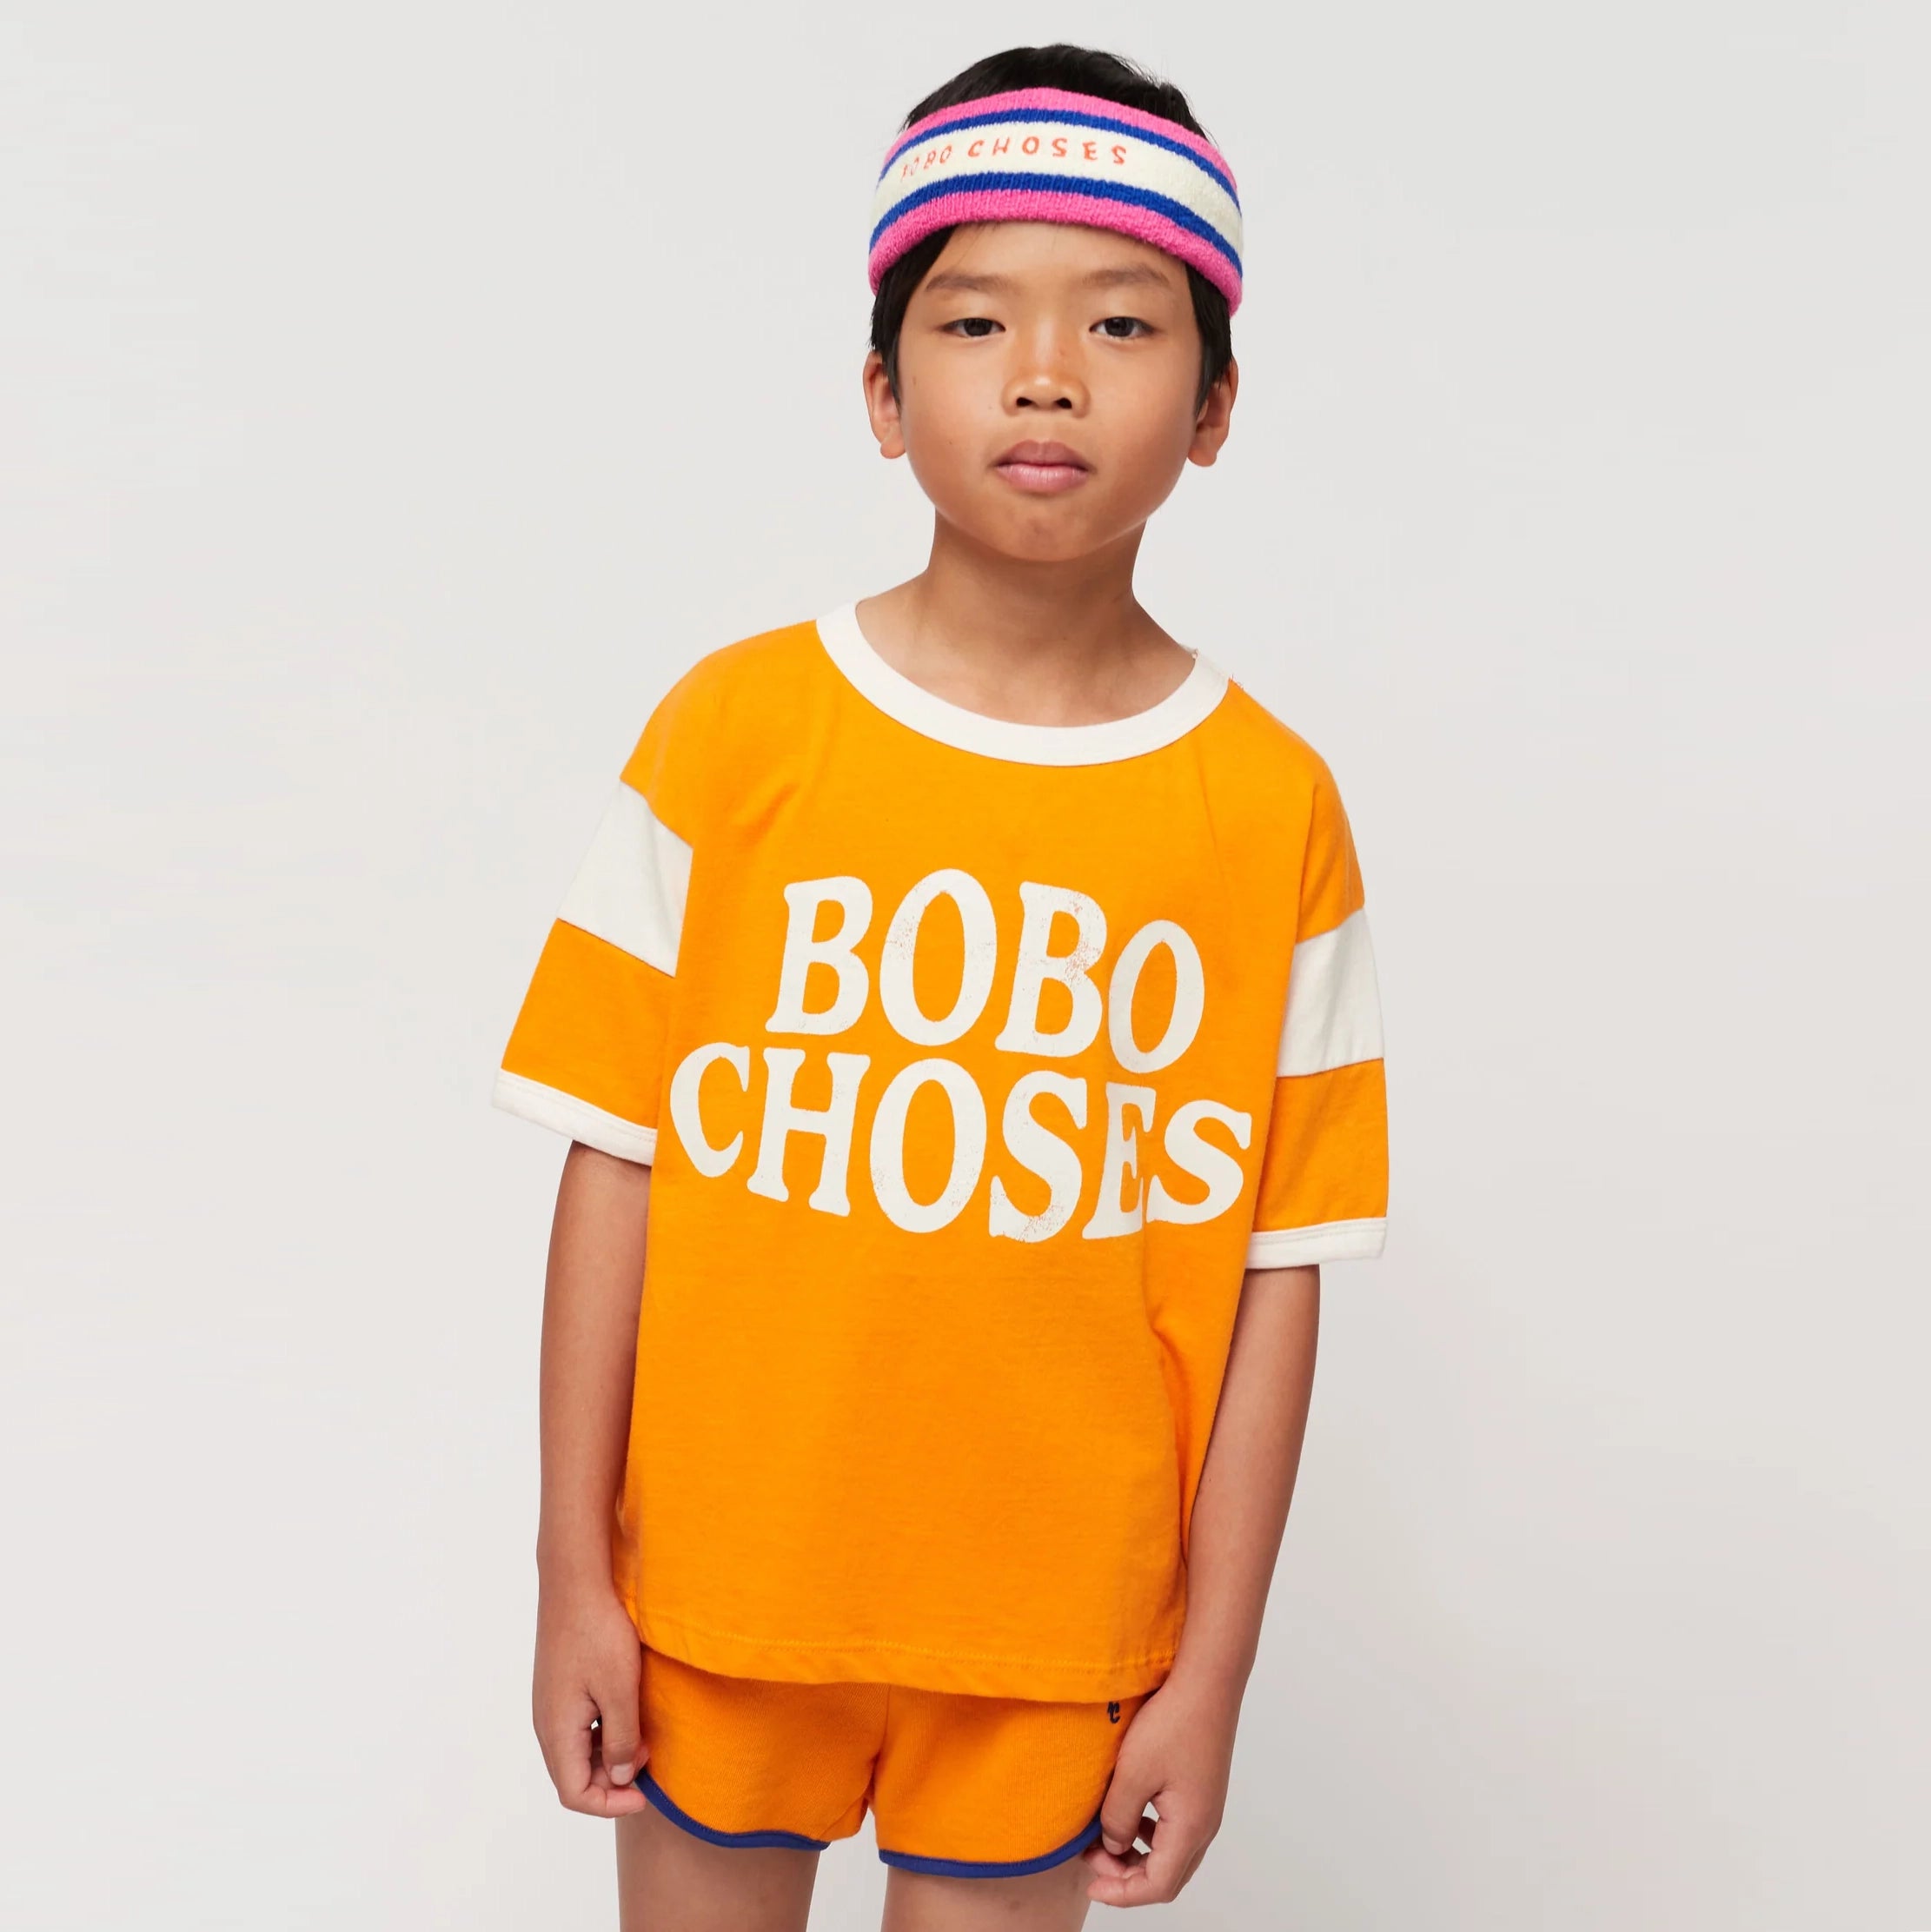 BOBO CHOSES T-SHIRT